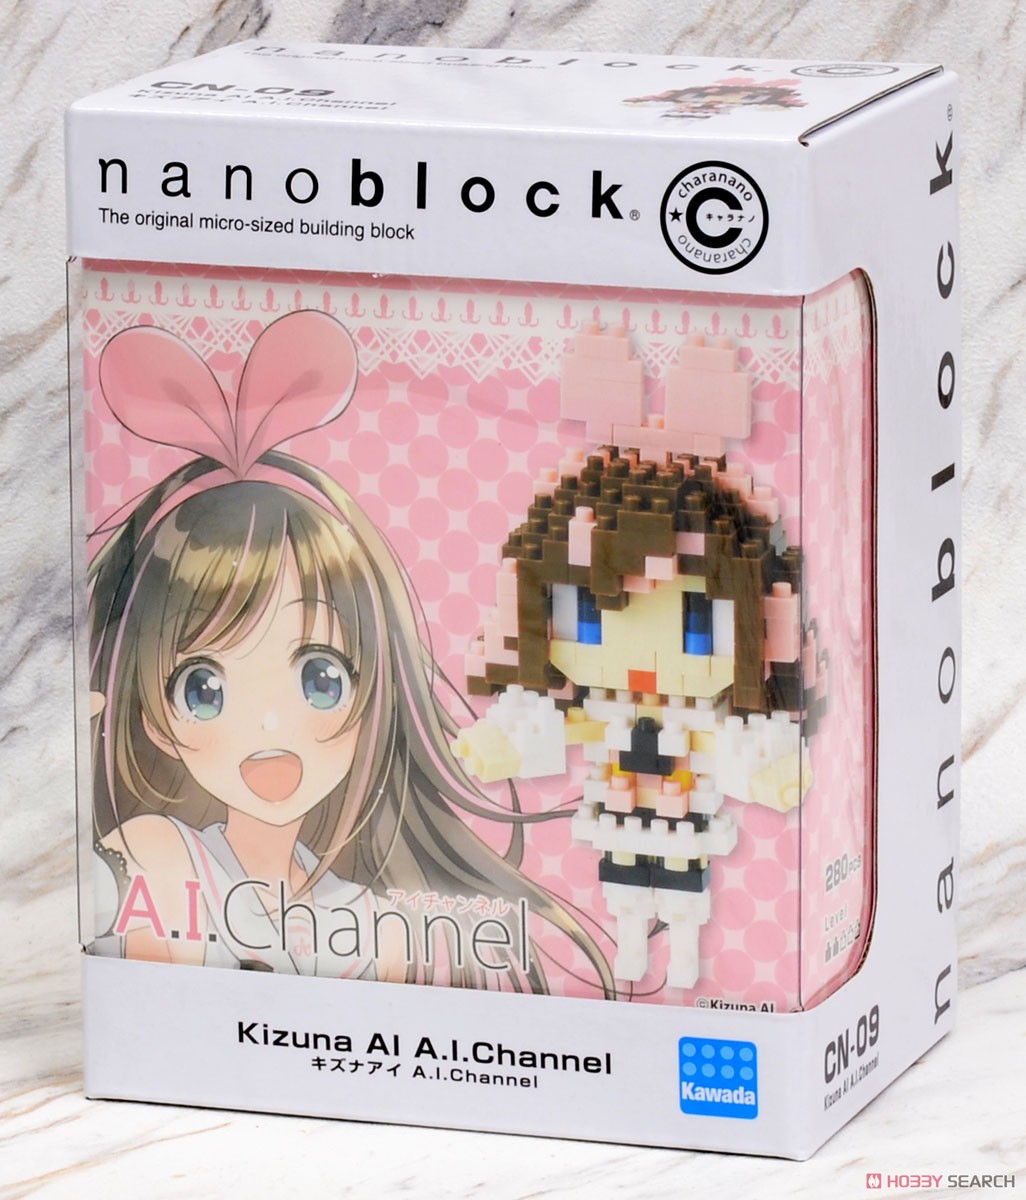 nanoblock キャラナノ キズナアイ A.I.Channel (ブロック) パッケージ1